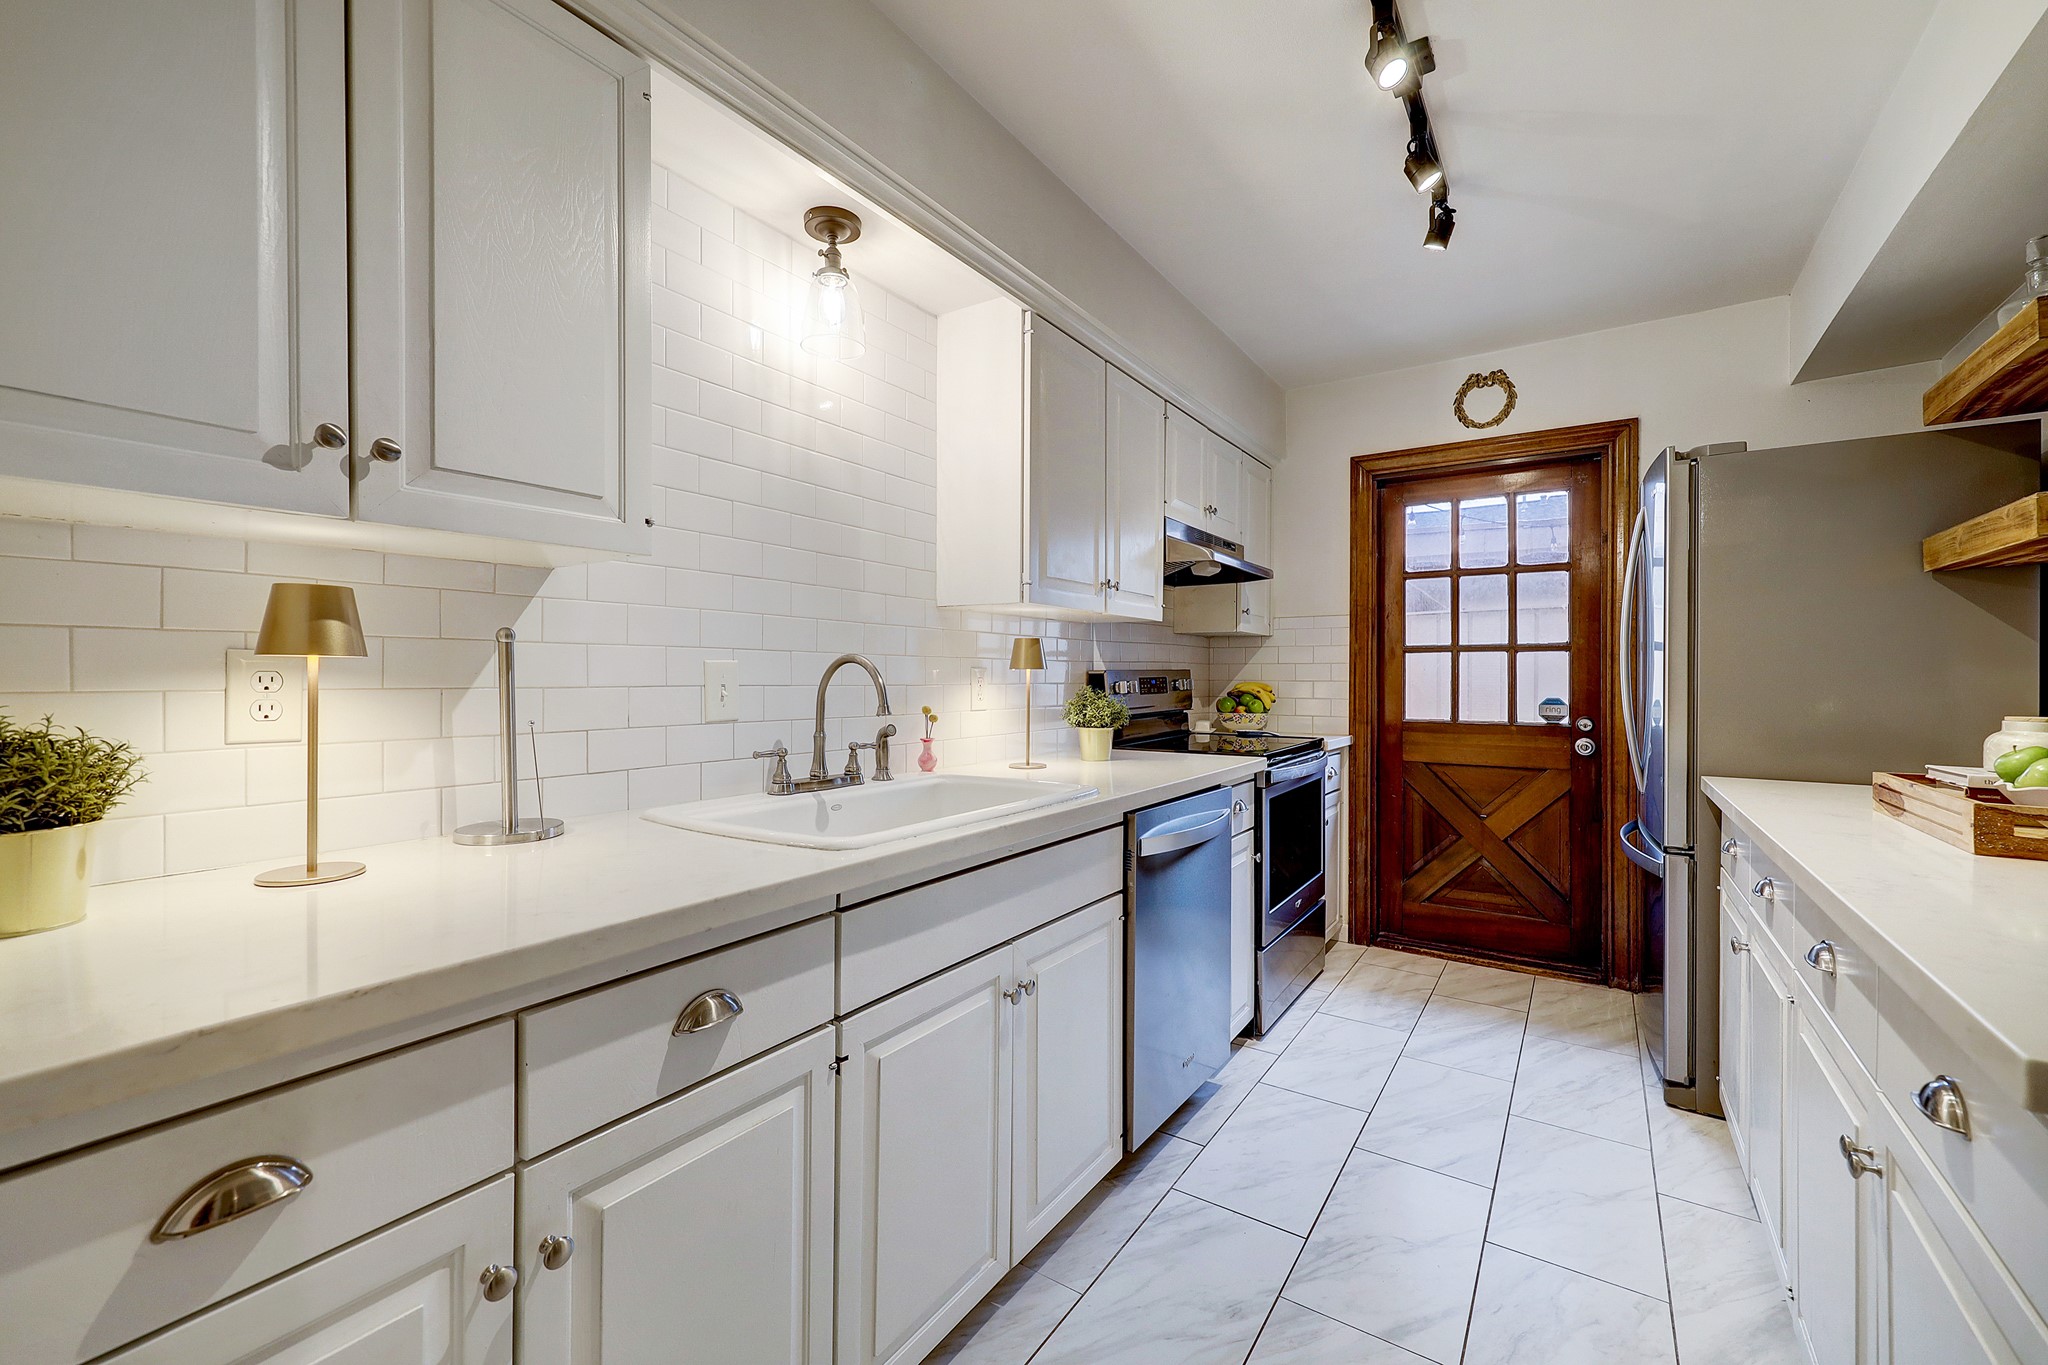 Porcelain tile floors, Koehler sink and updated light fixtures. *As per seller.